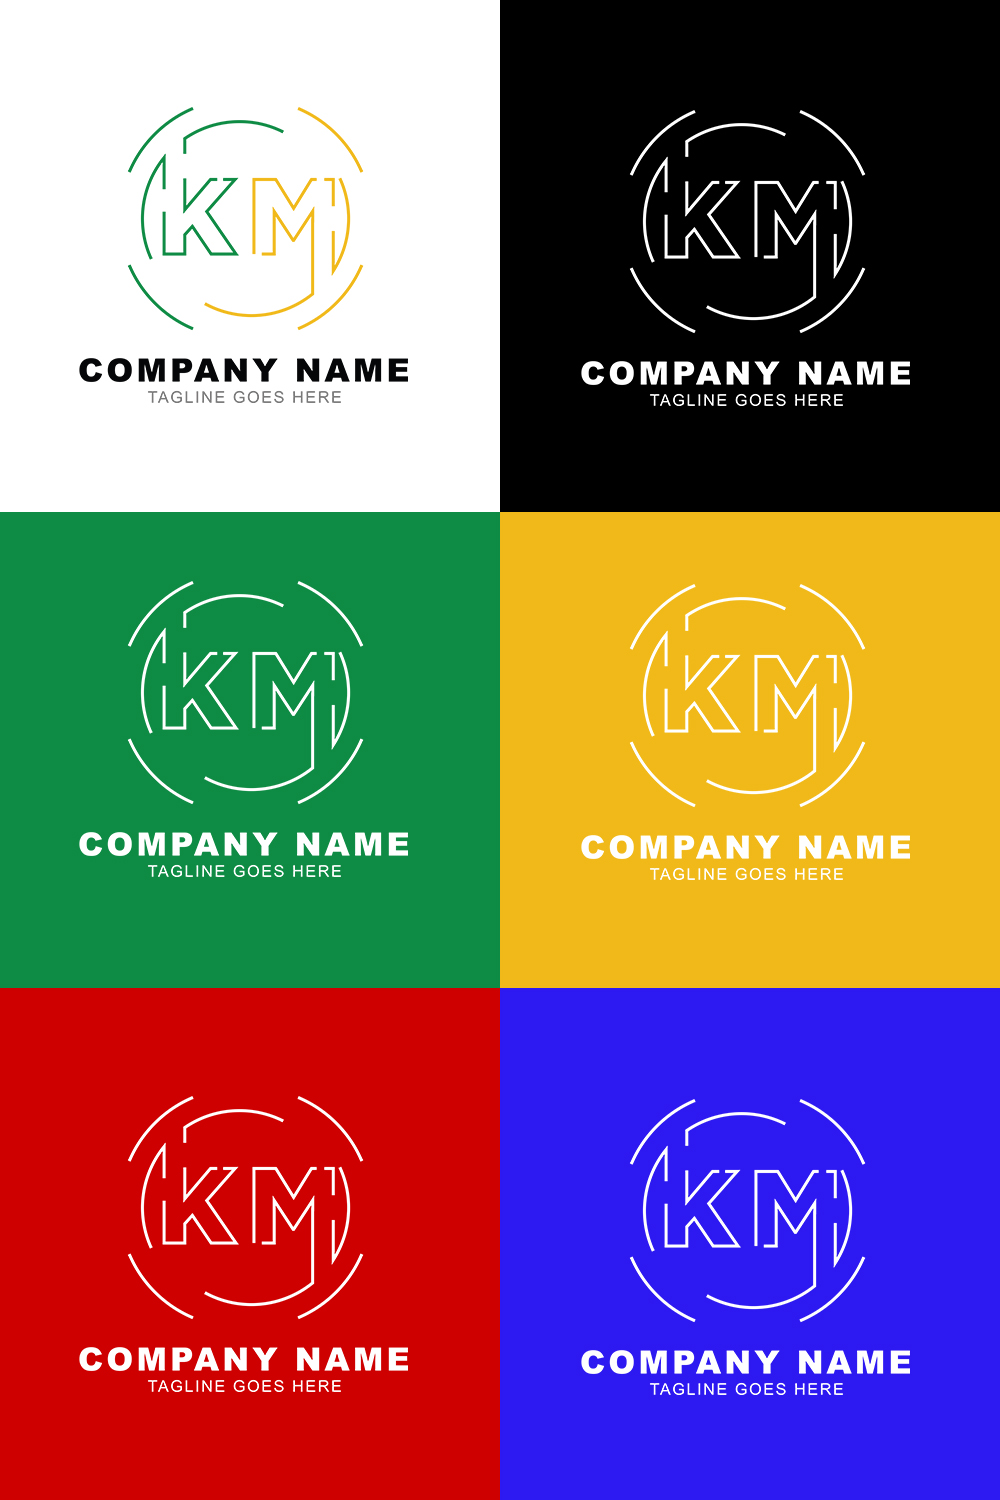 Letter (K&M) Lettermark Logo Design For Business – Just $20 pinterest preview image.